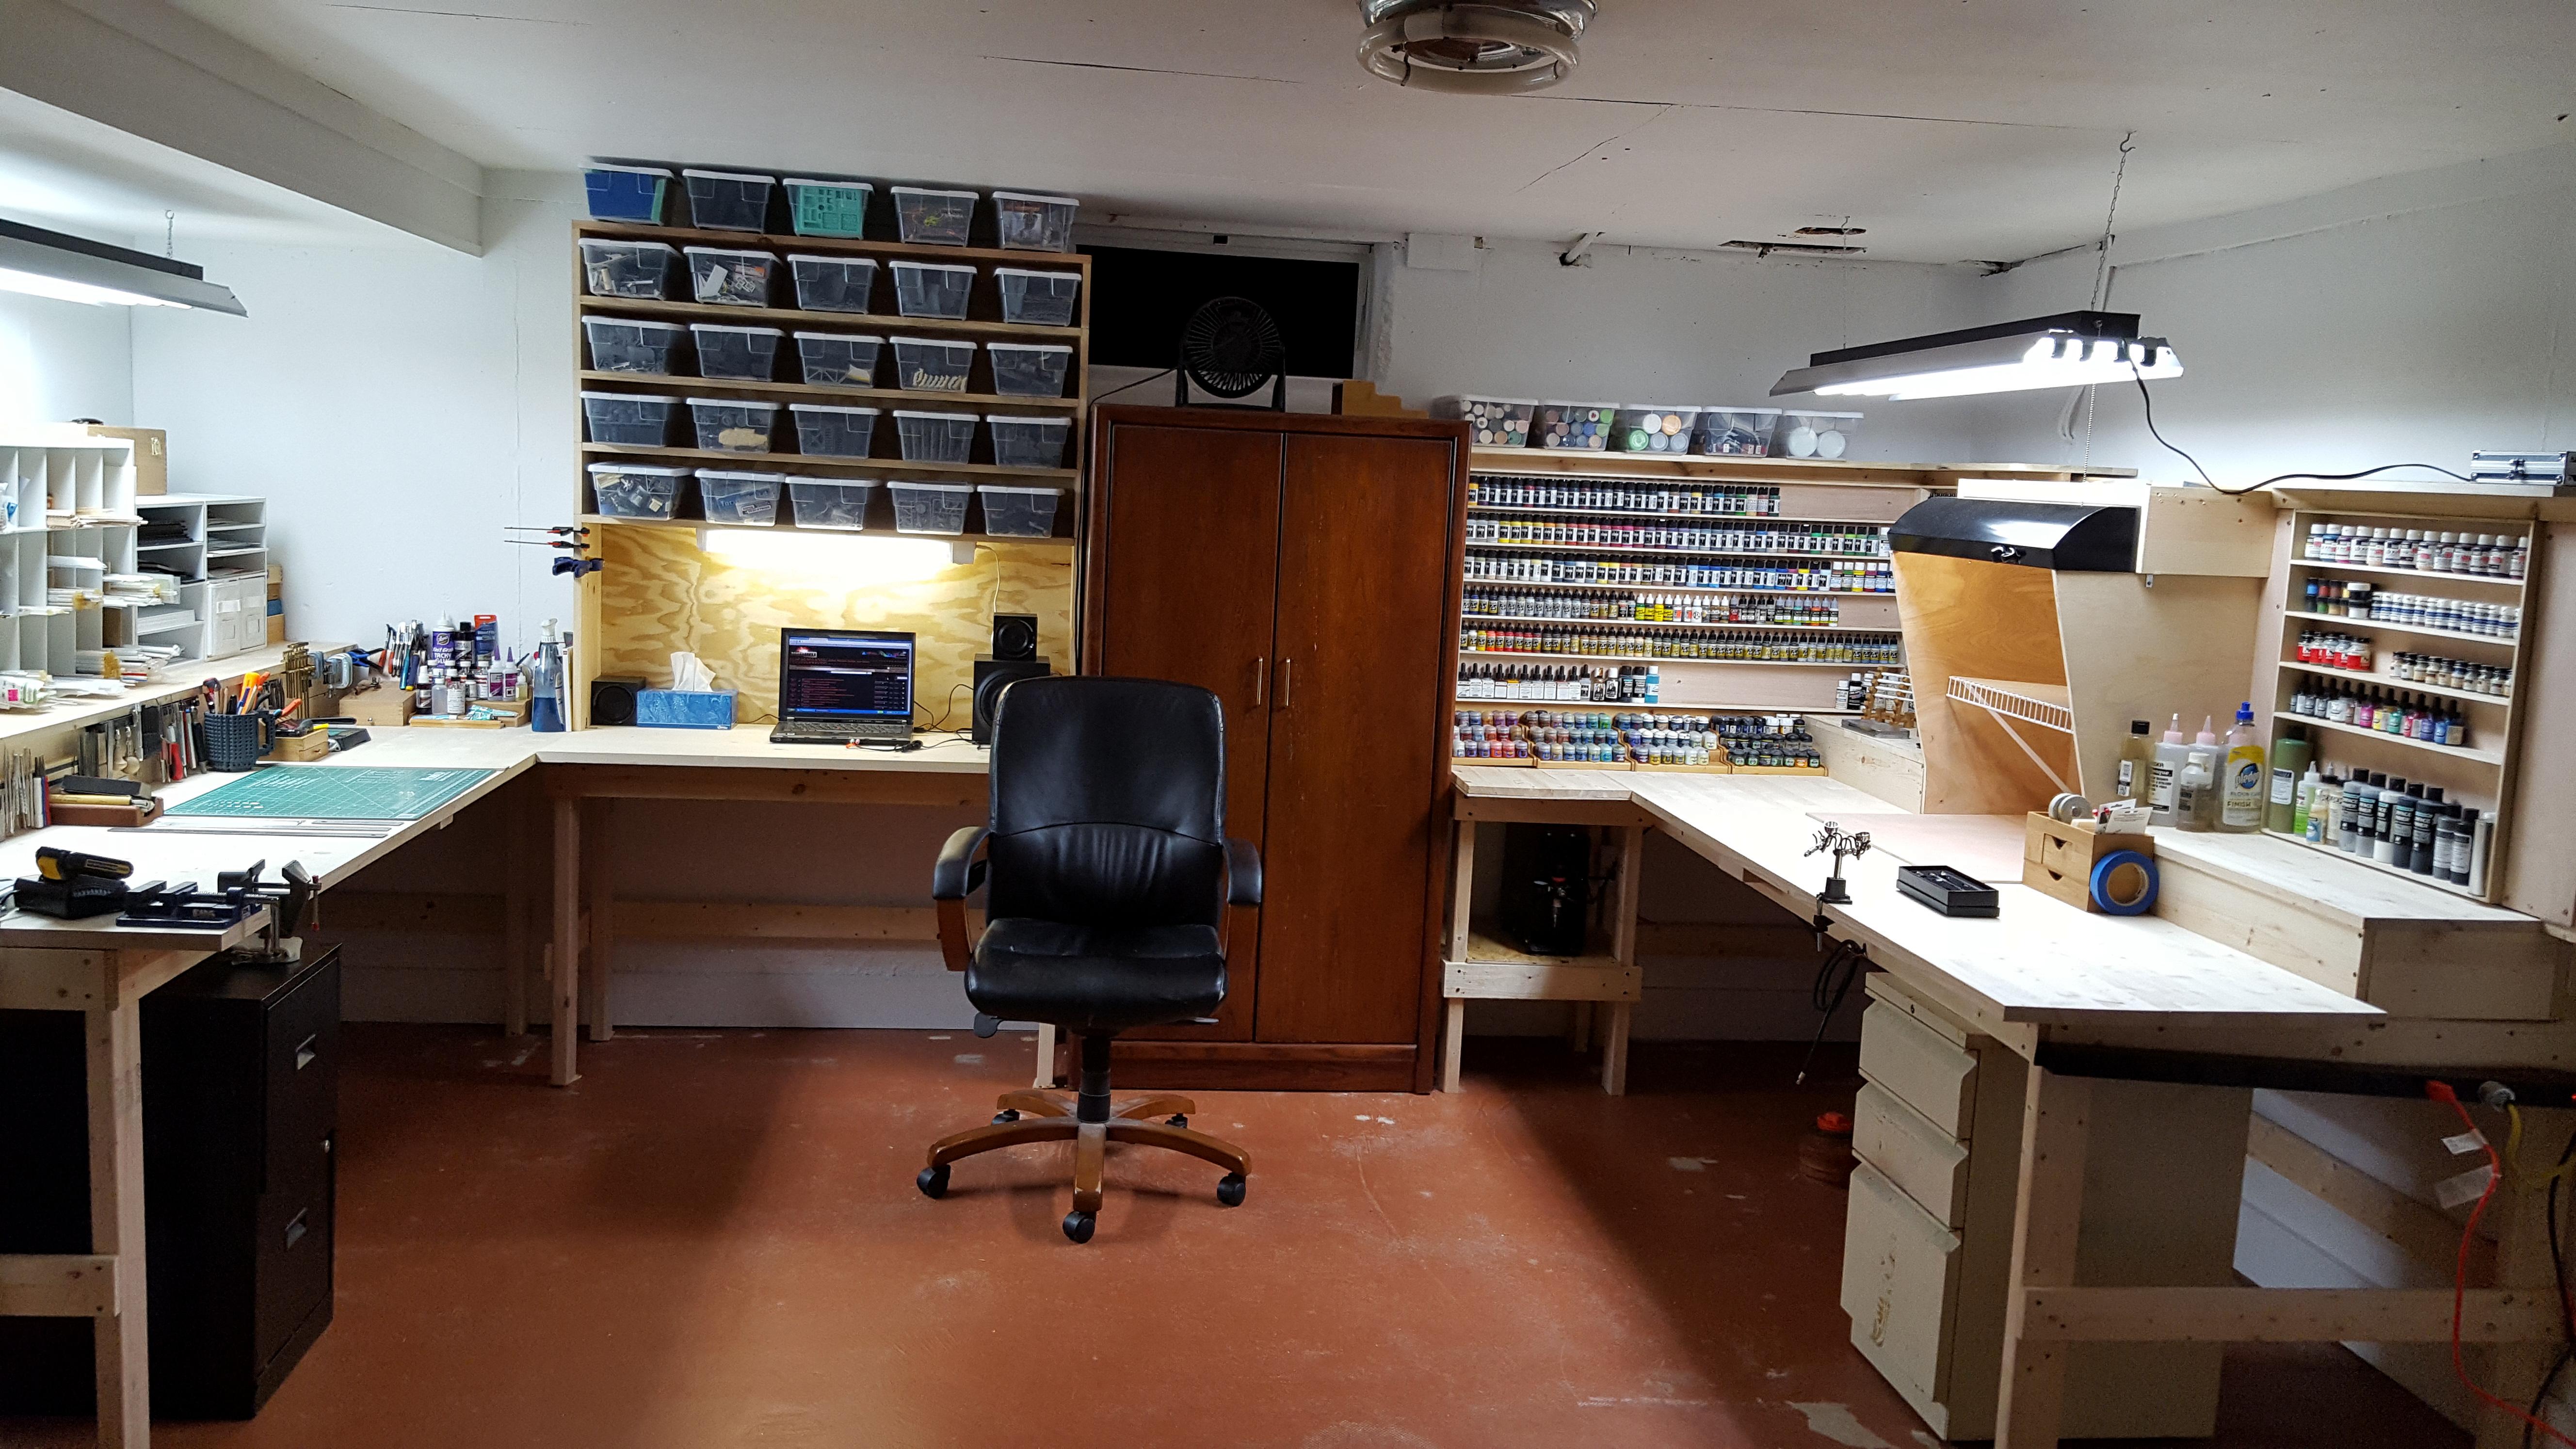 Bench, Hobby Room, Organization, Painting, Scratch Build, Storage, Workbench, Workspace